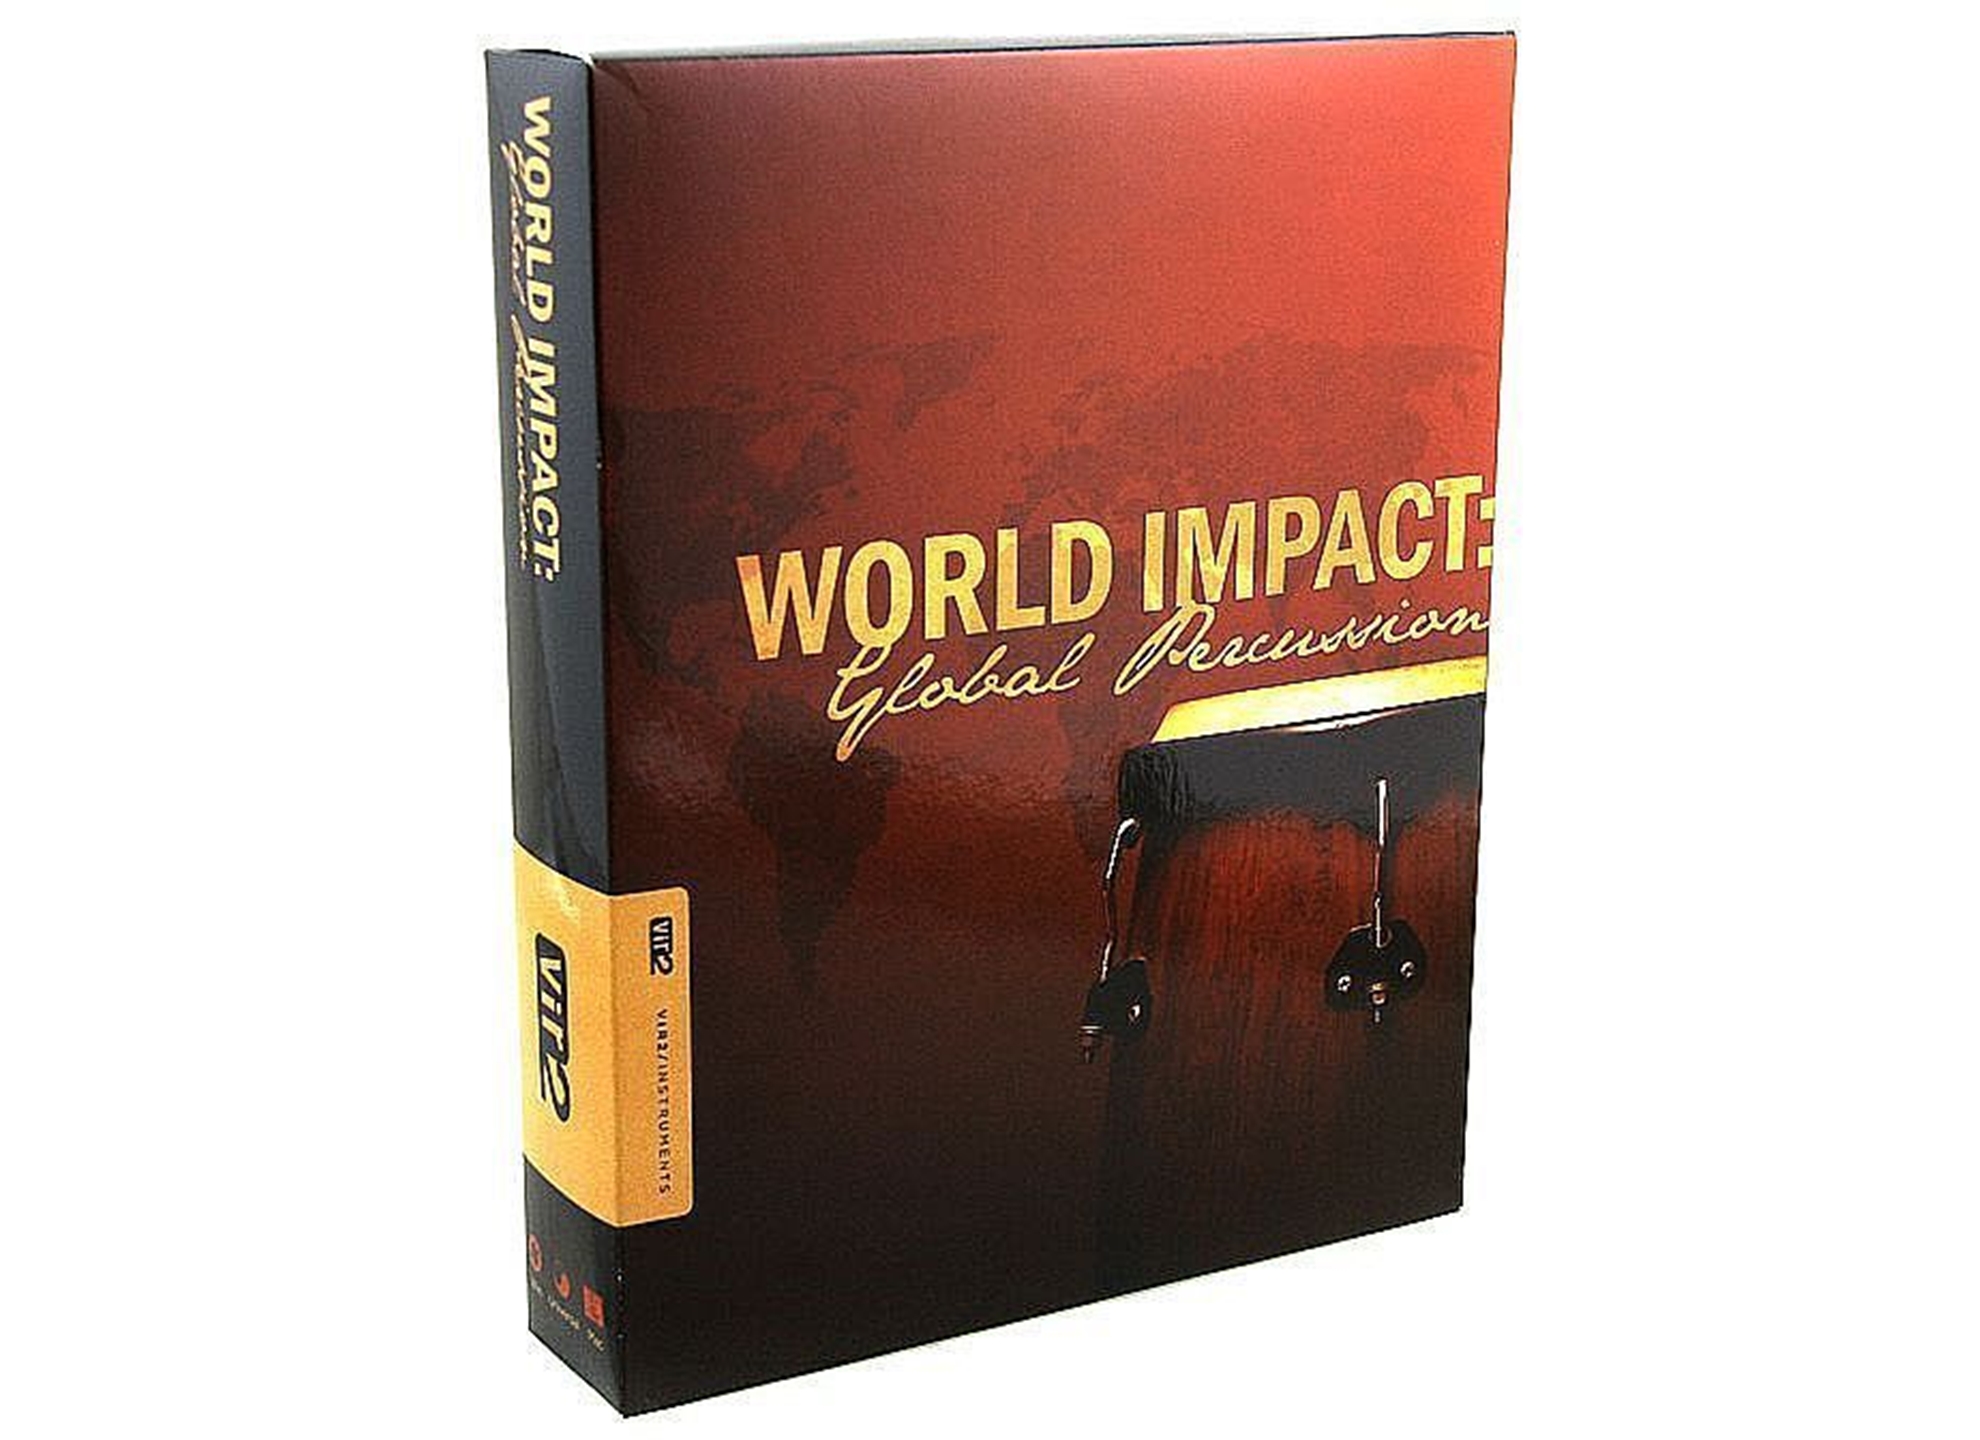 World Impact: Global Percussion